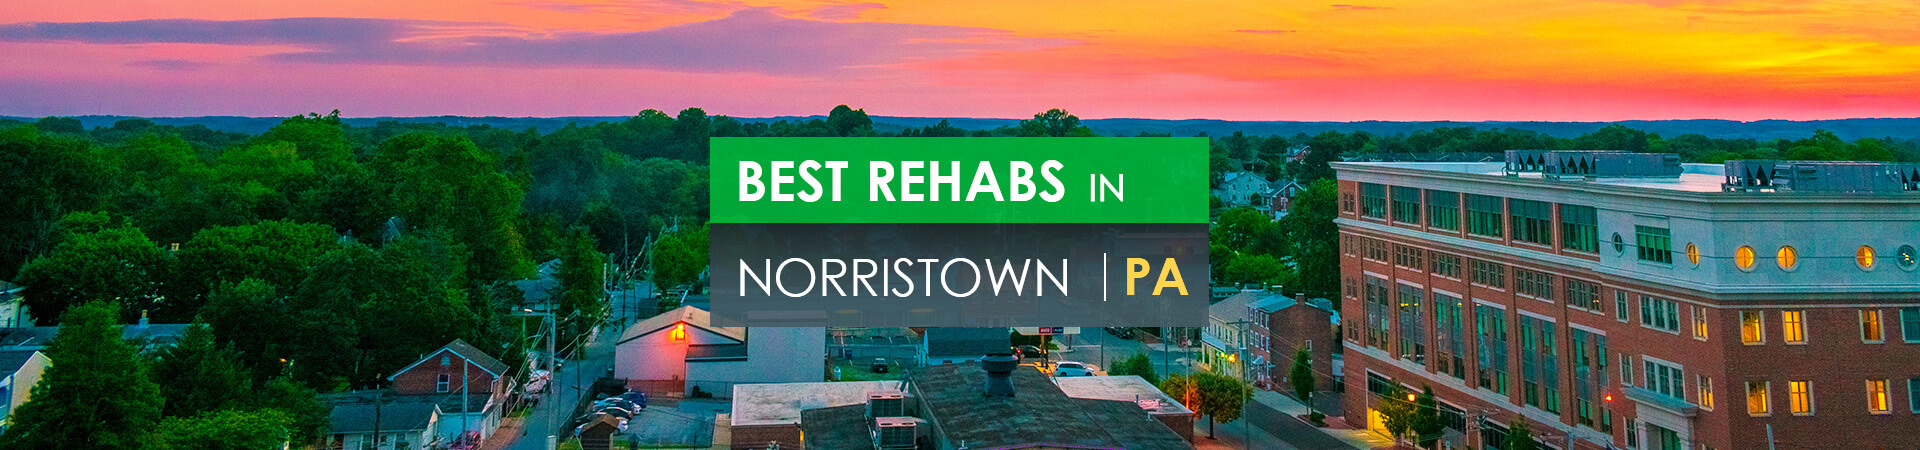 Best rehabs in Norristown, PA